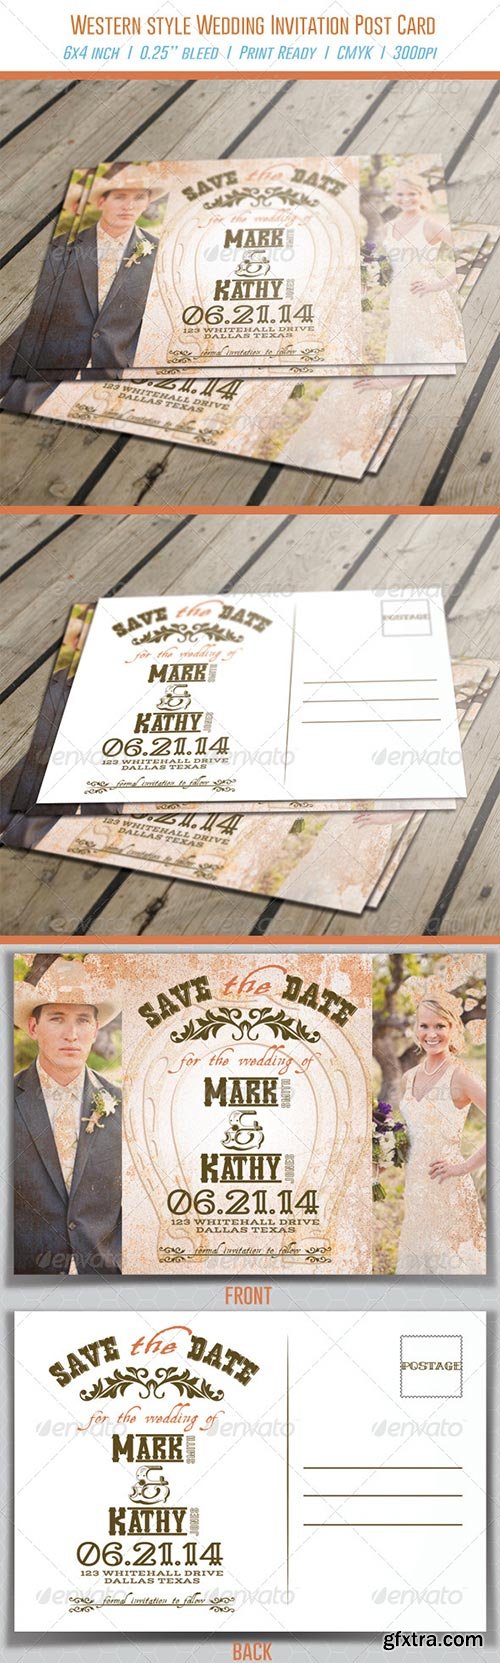 GraphicRiver - Western Style Wedding Invitation Post Card